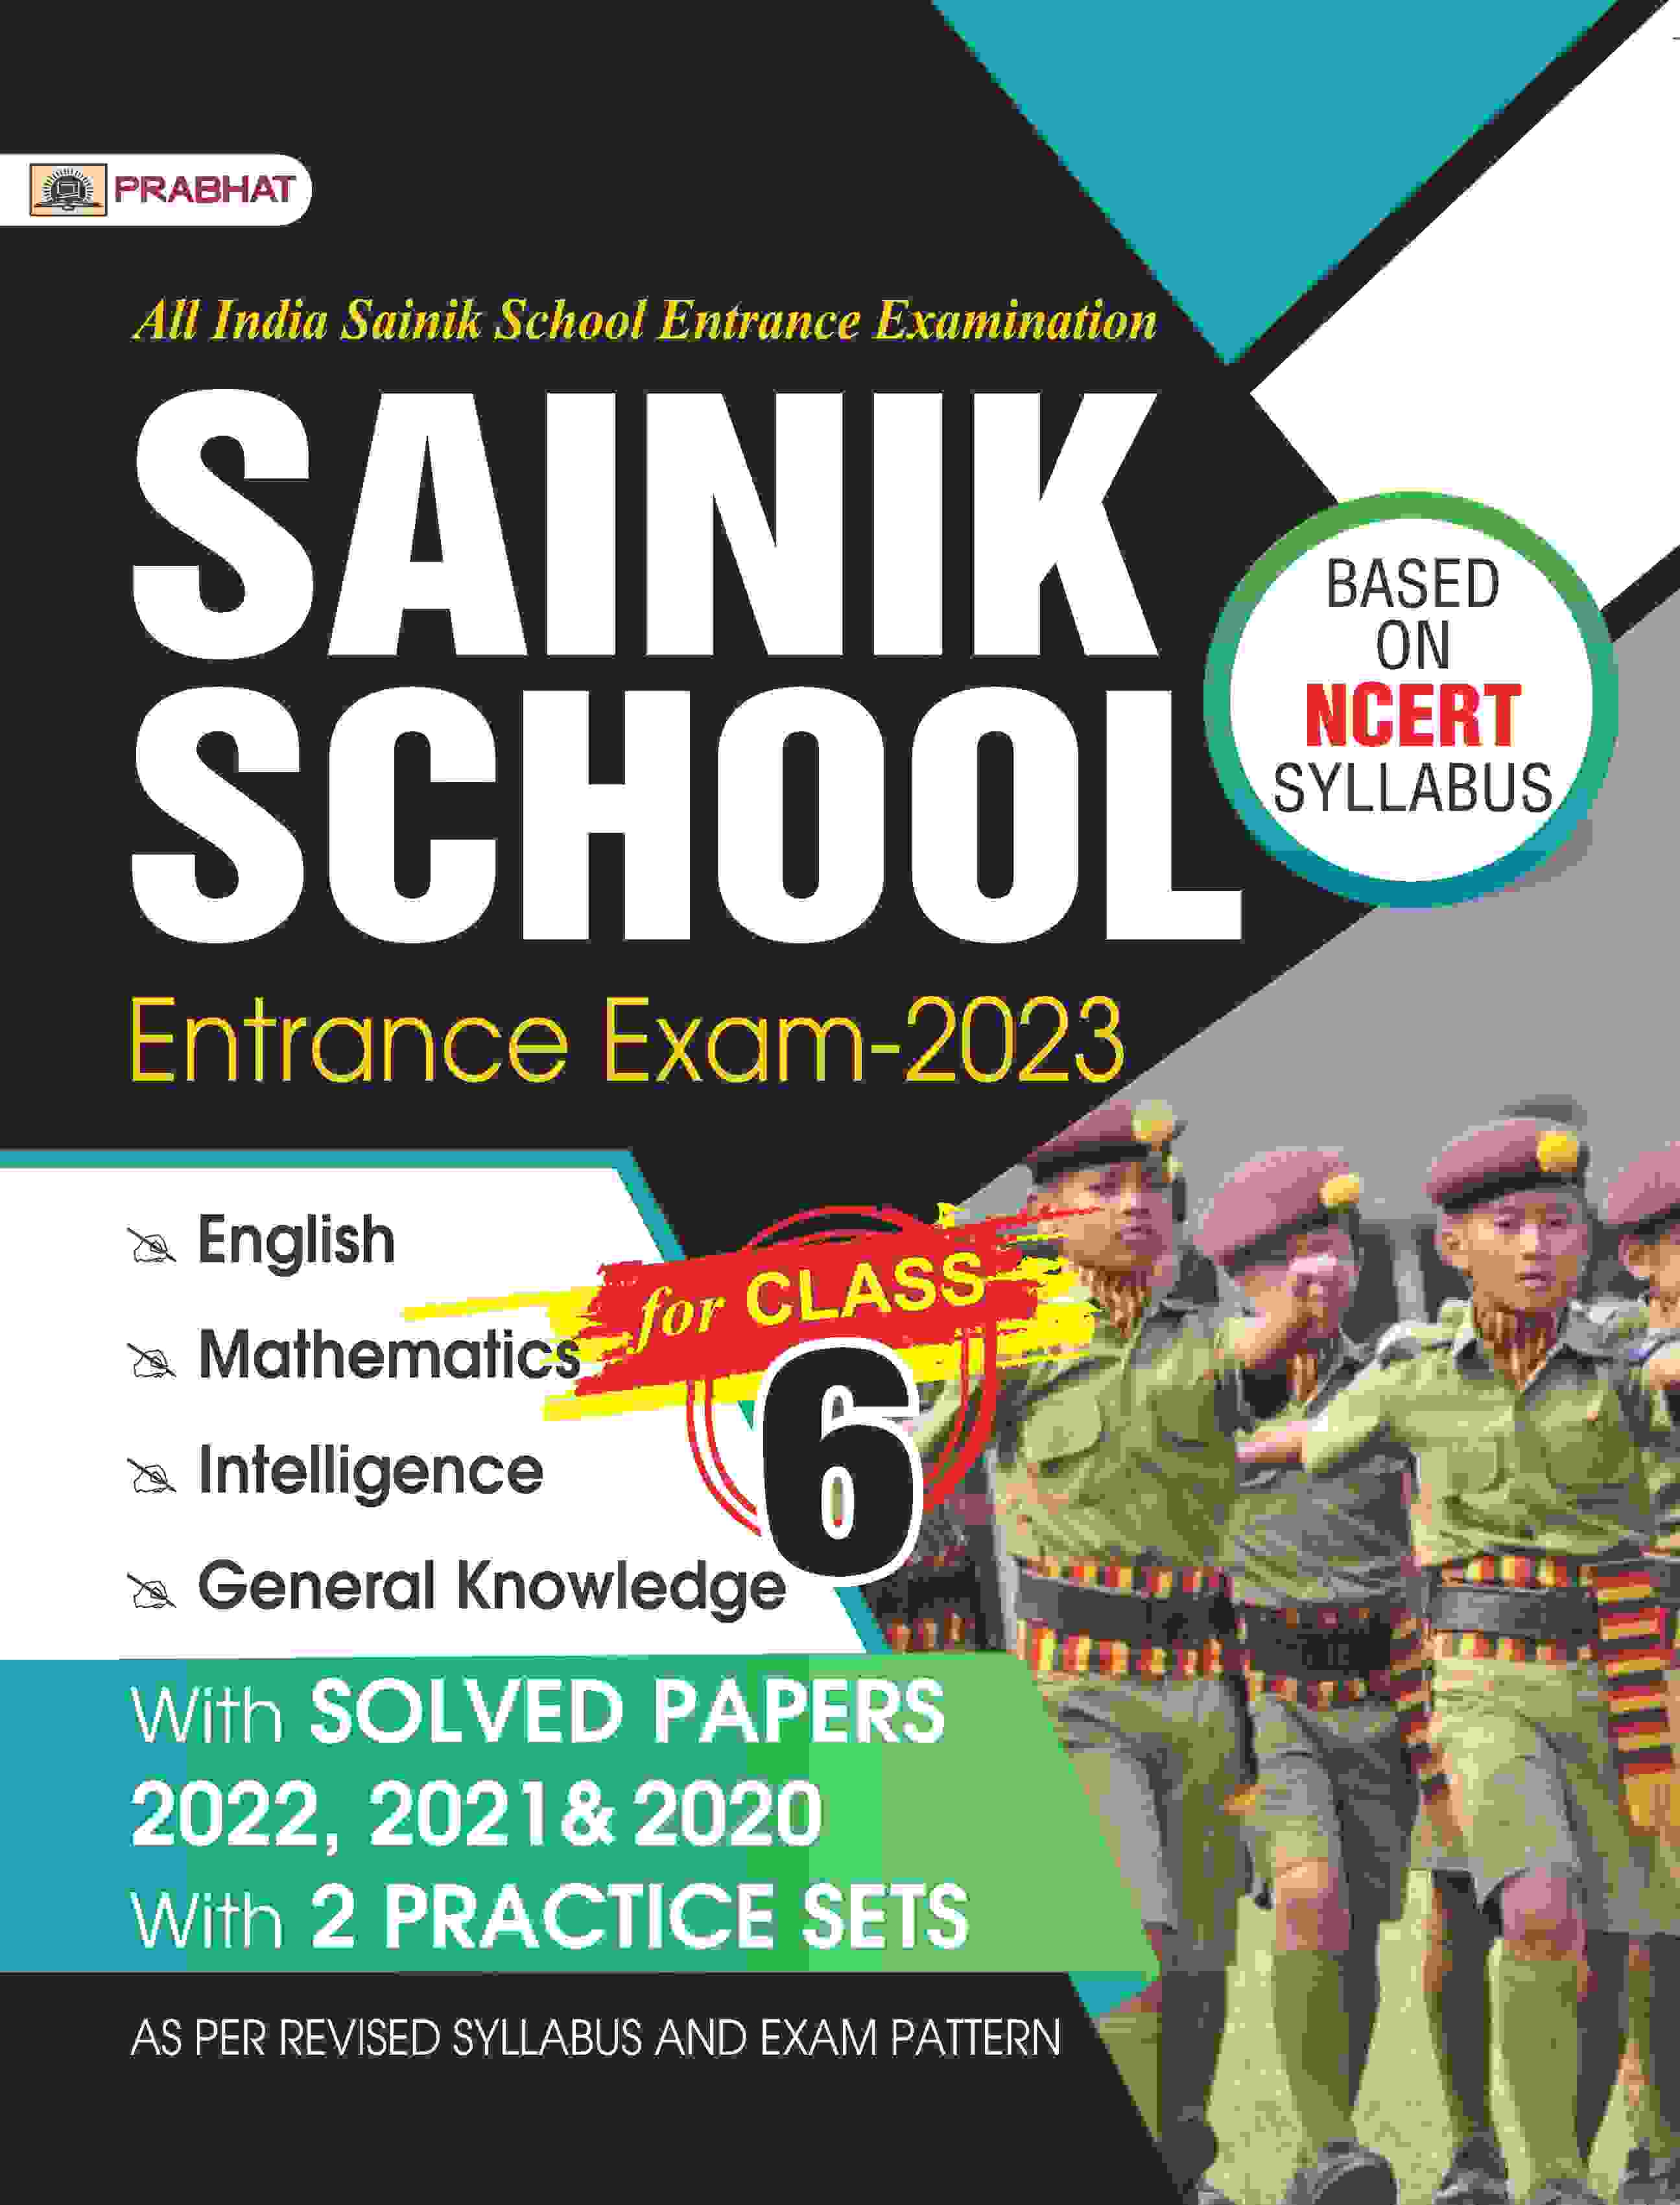 AISSEE: All India Sainik School Entrance Exam...